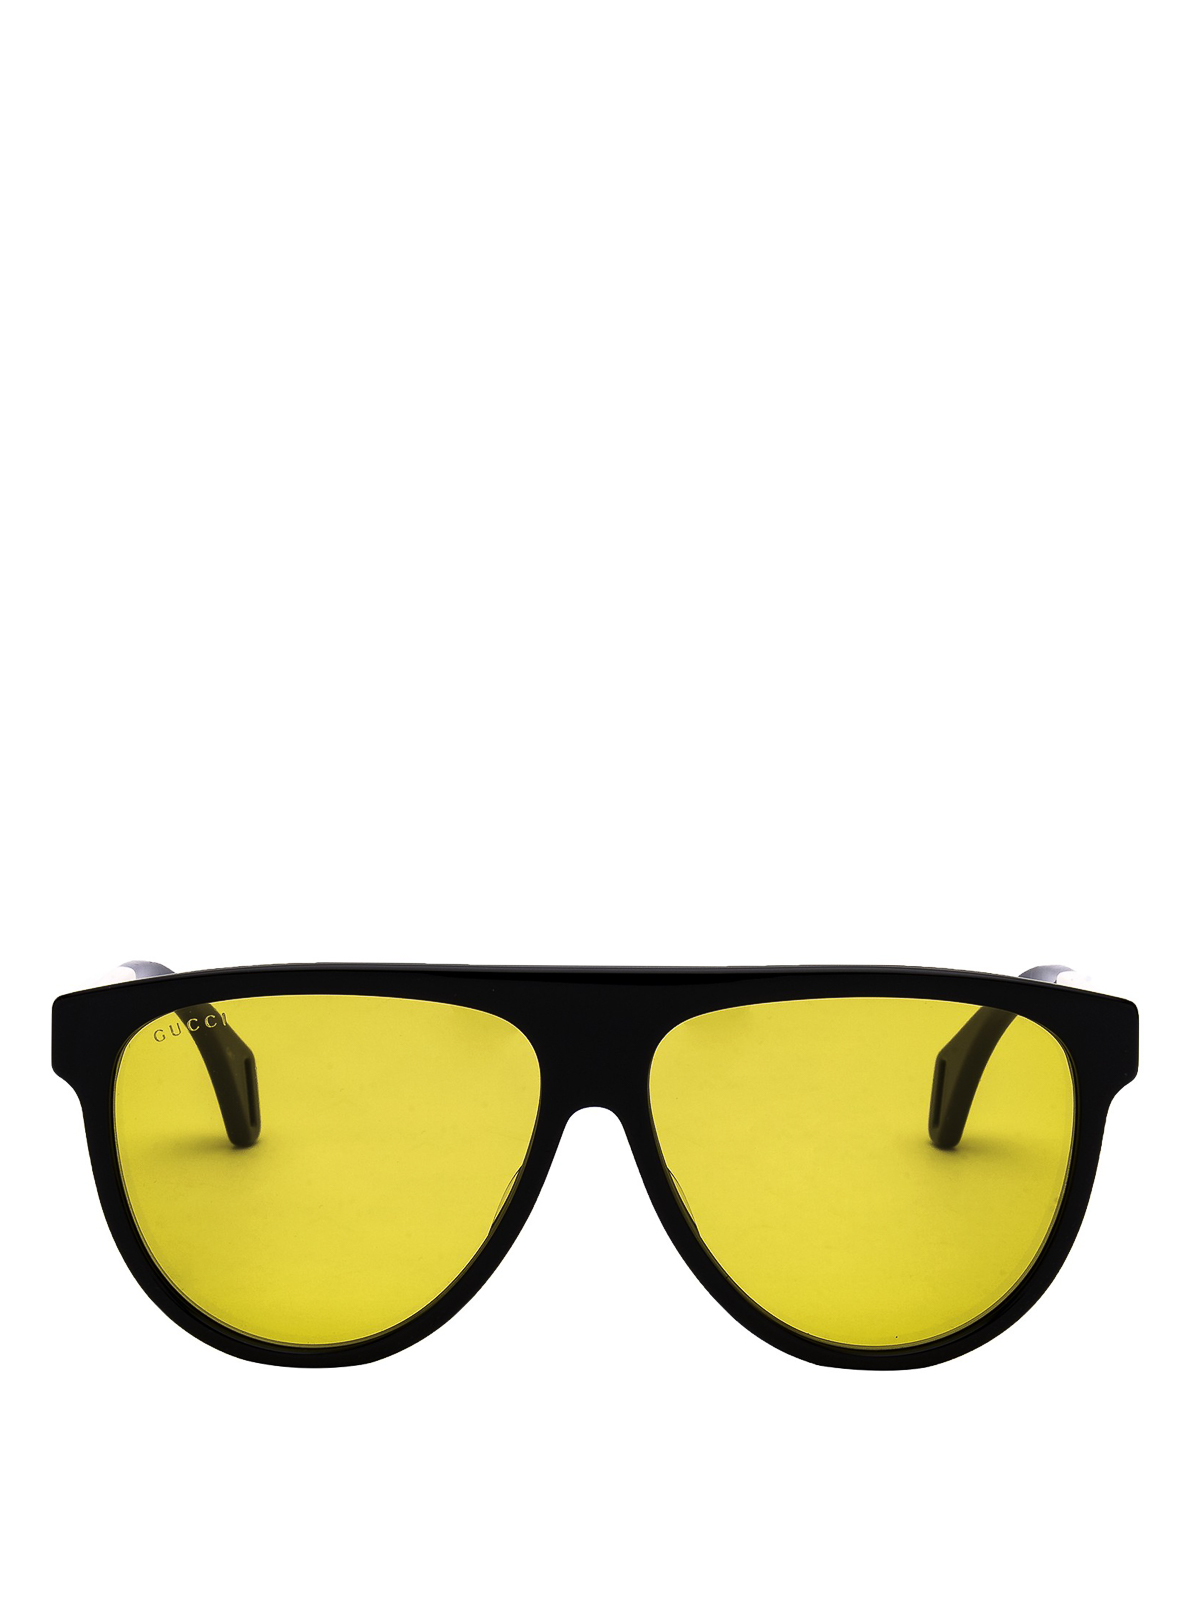 gucci yellow sunglasses